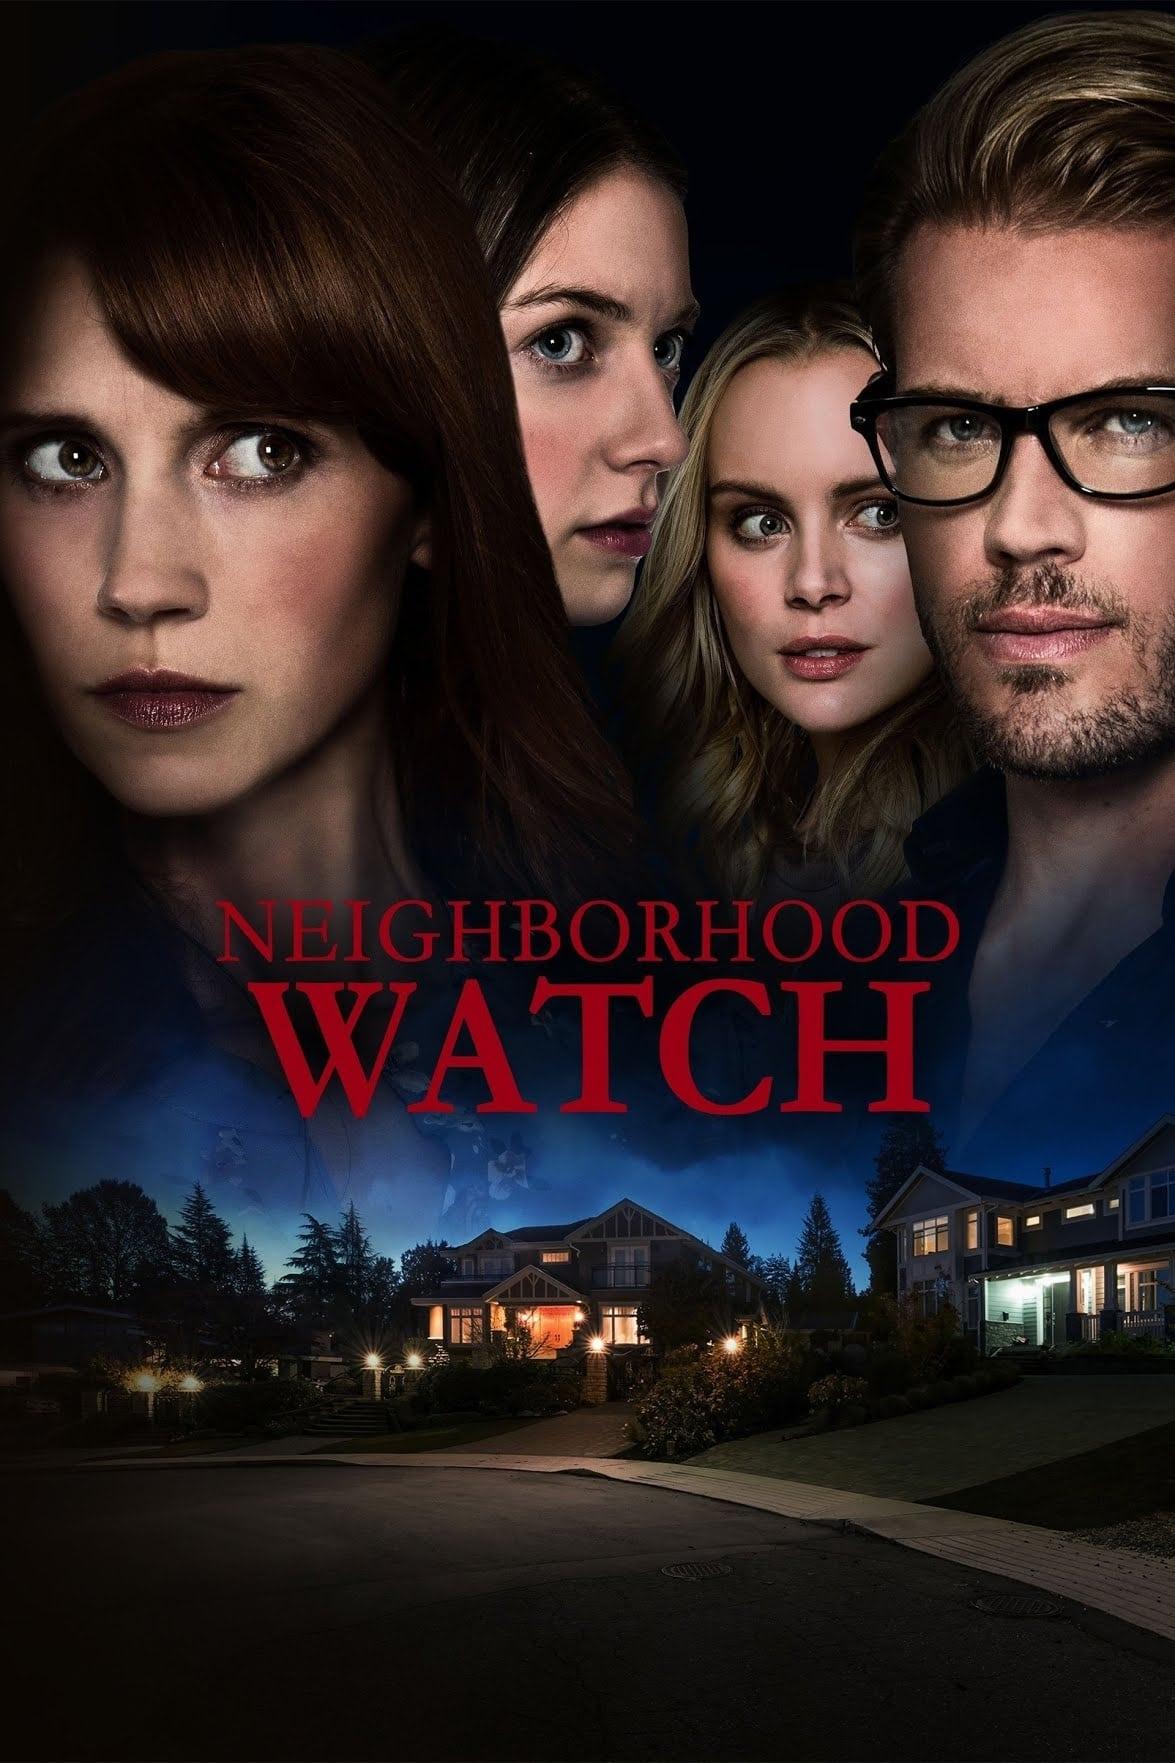 The Neighborhood Nightmare poster